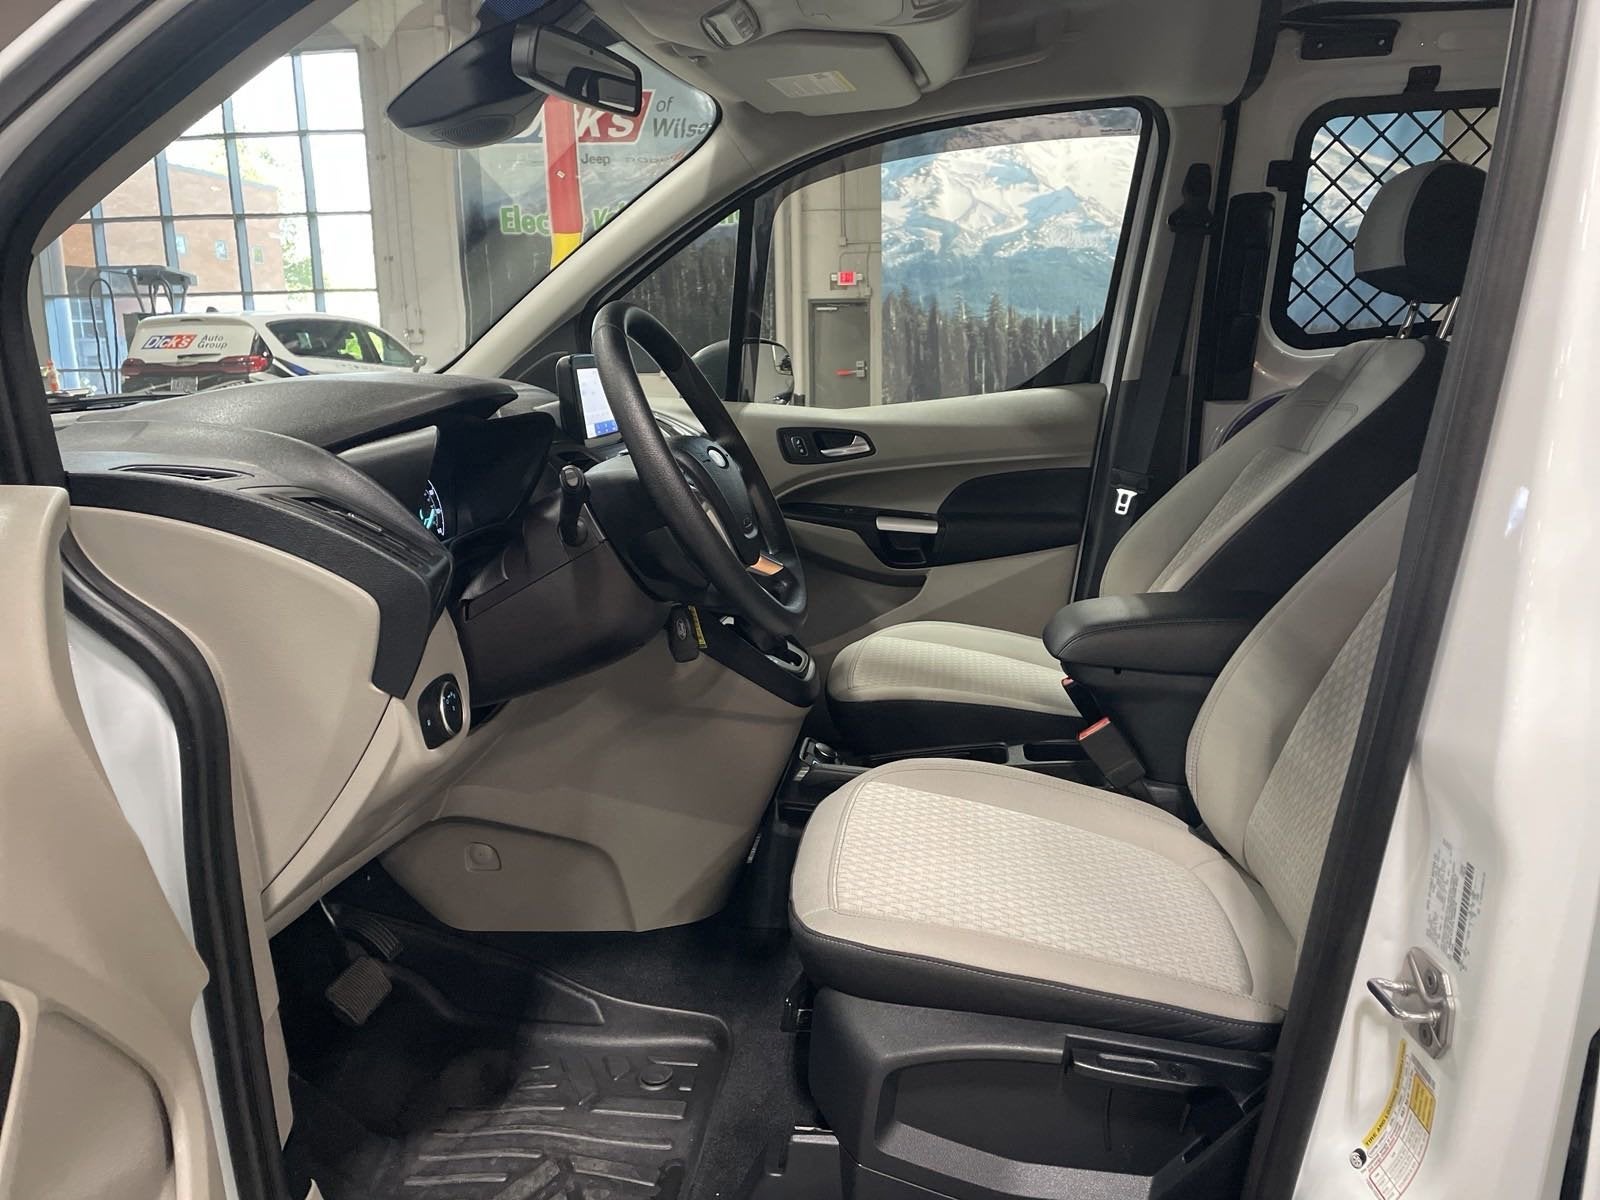 2020 Ford Transit Connect Van XLT